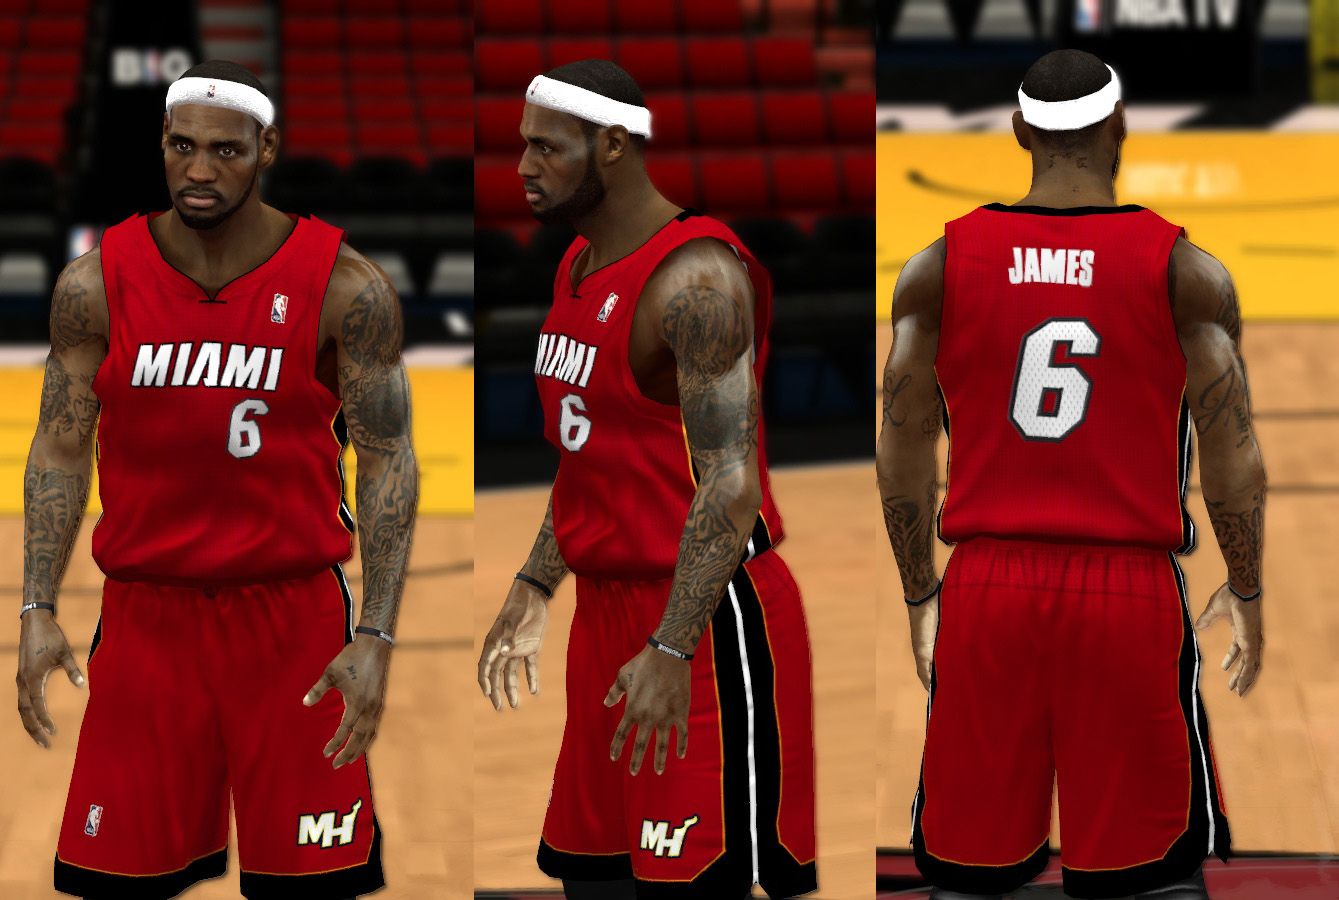 NBA Miami Heat Vice Jersey,NBA 2k14 Miami Heat Jersey,Hassan